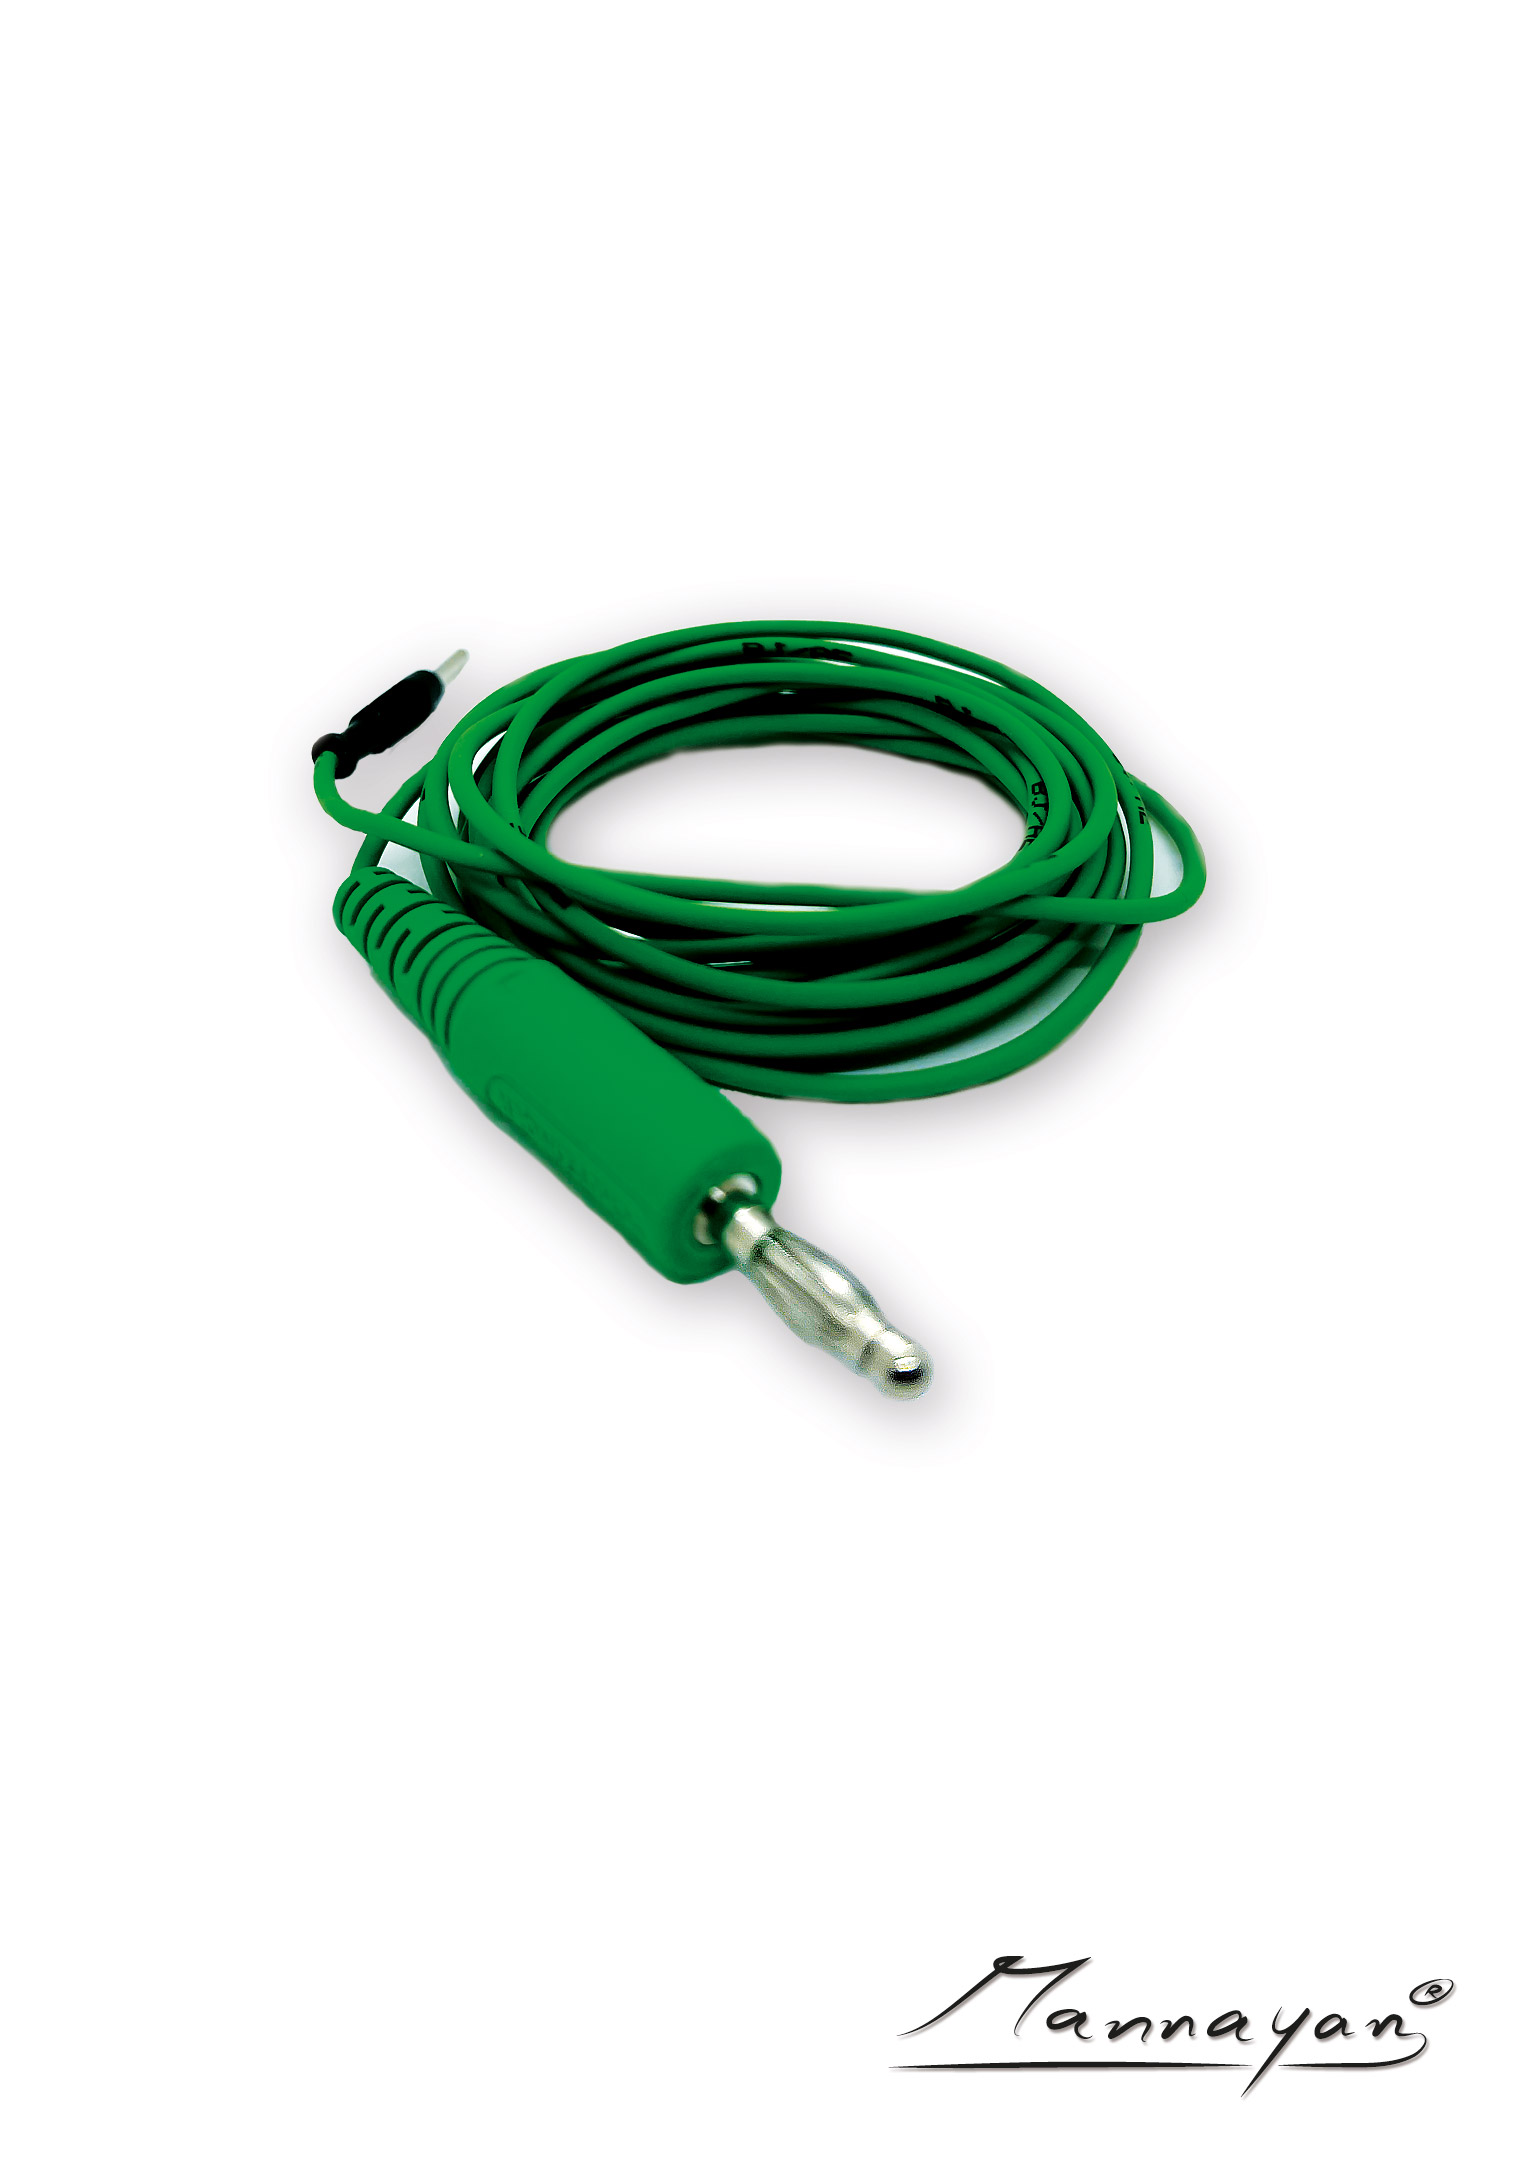 Cable (2,5 m) con adaptador de conector para electrodos textiles de superficie (verde)